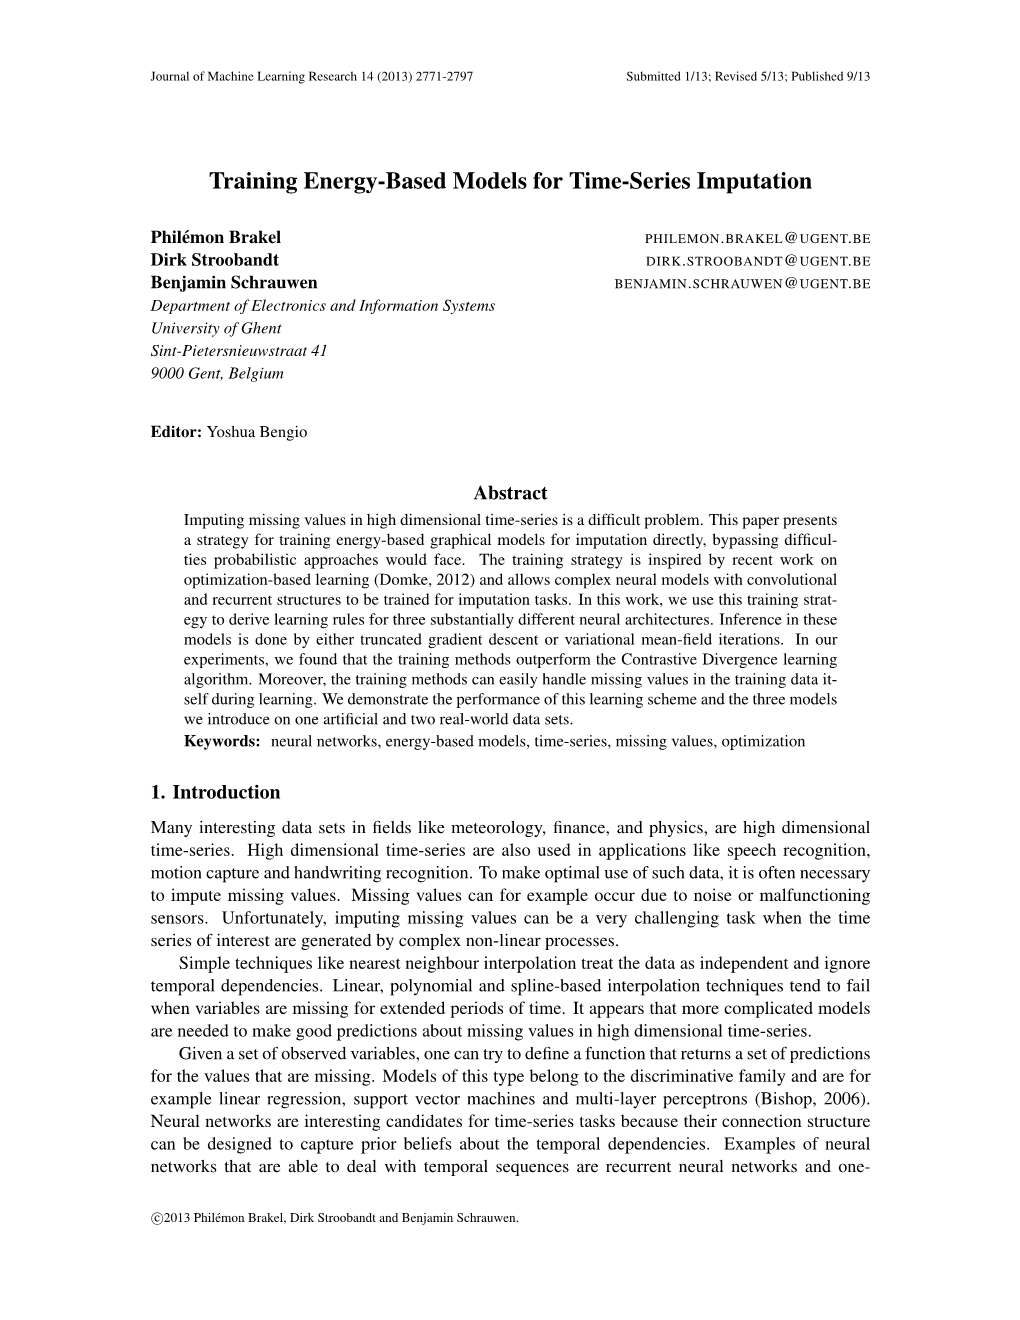 Training Energy-Based Models for Time-Series Imputation